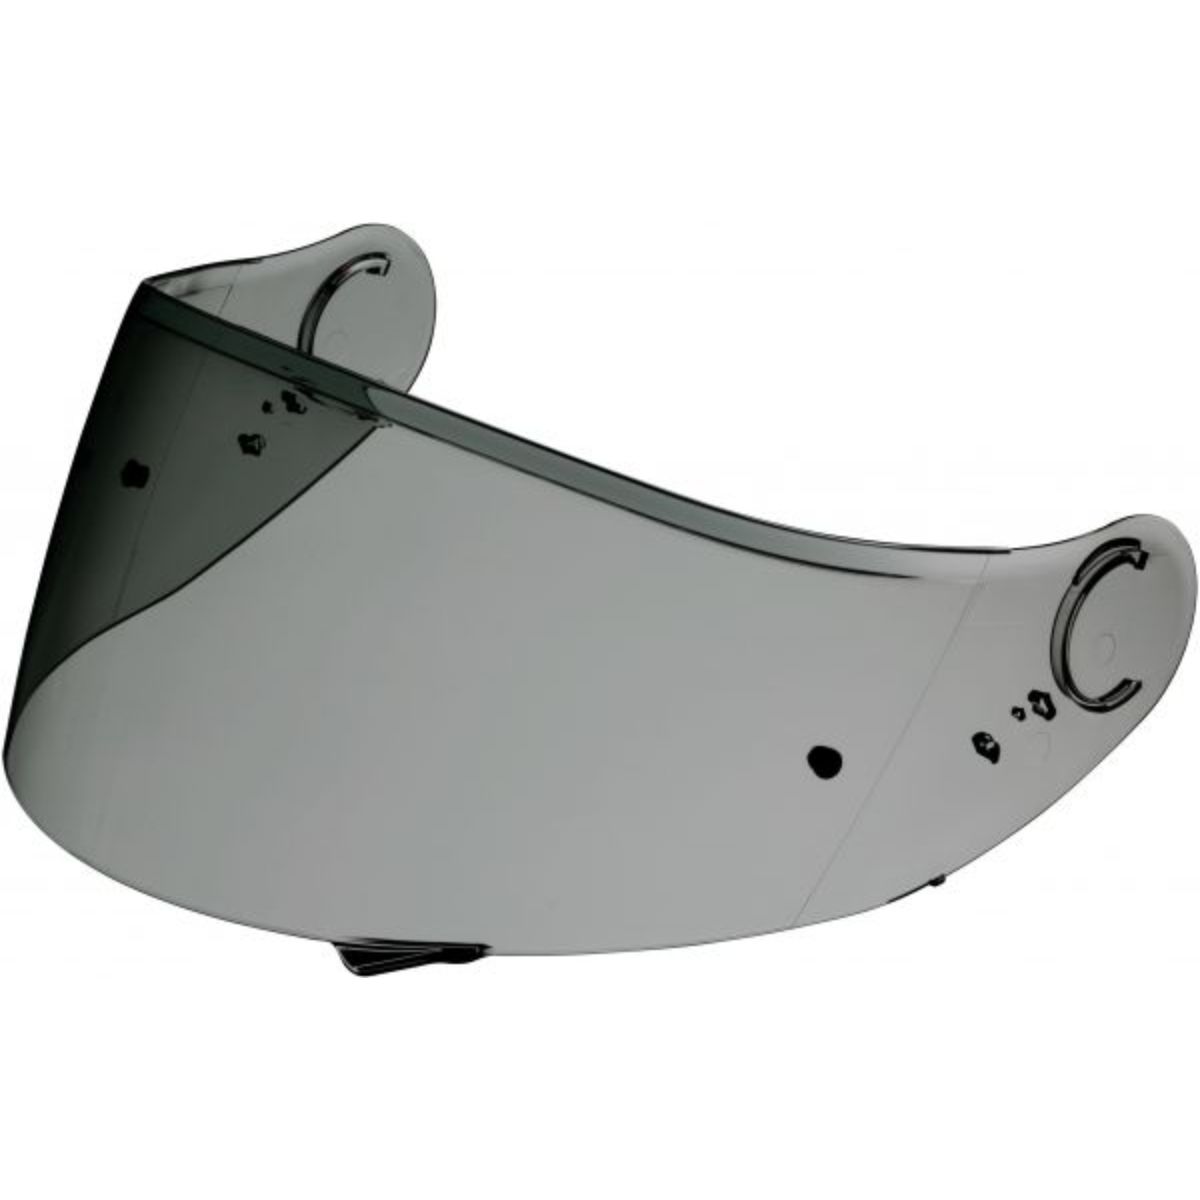 Genuine Shoei Helmets replacement visors for Shoei Models GT Air GT Air II Neotec